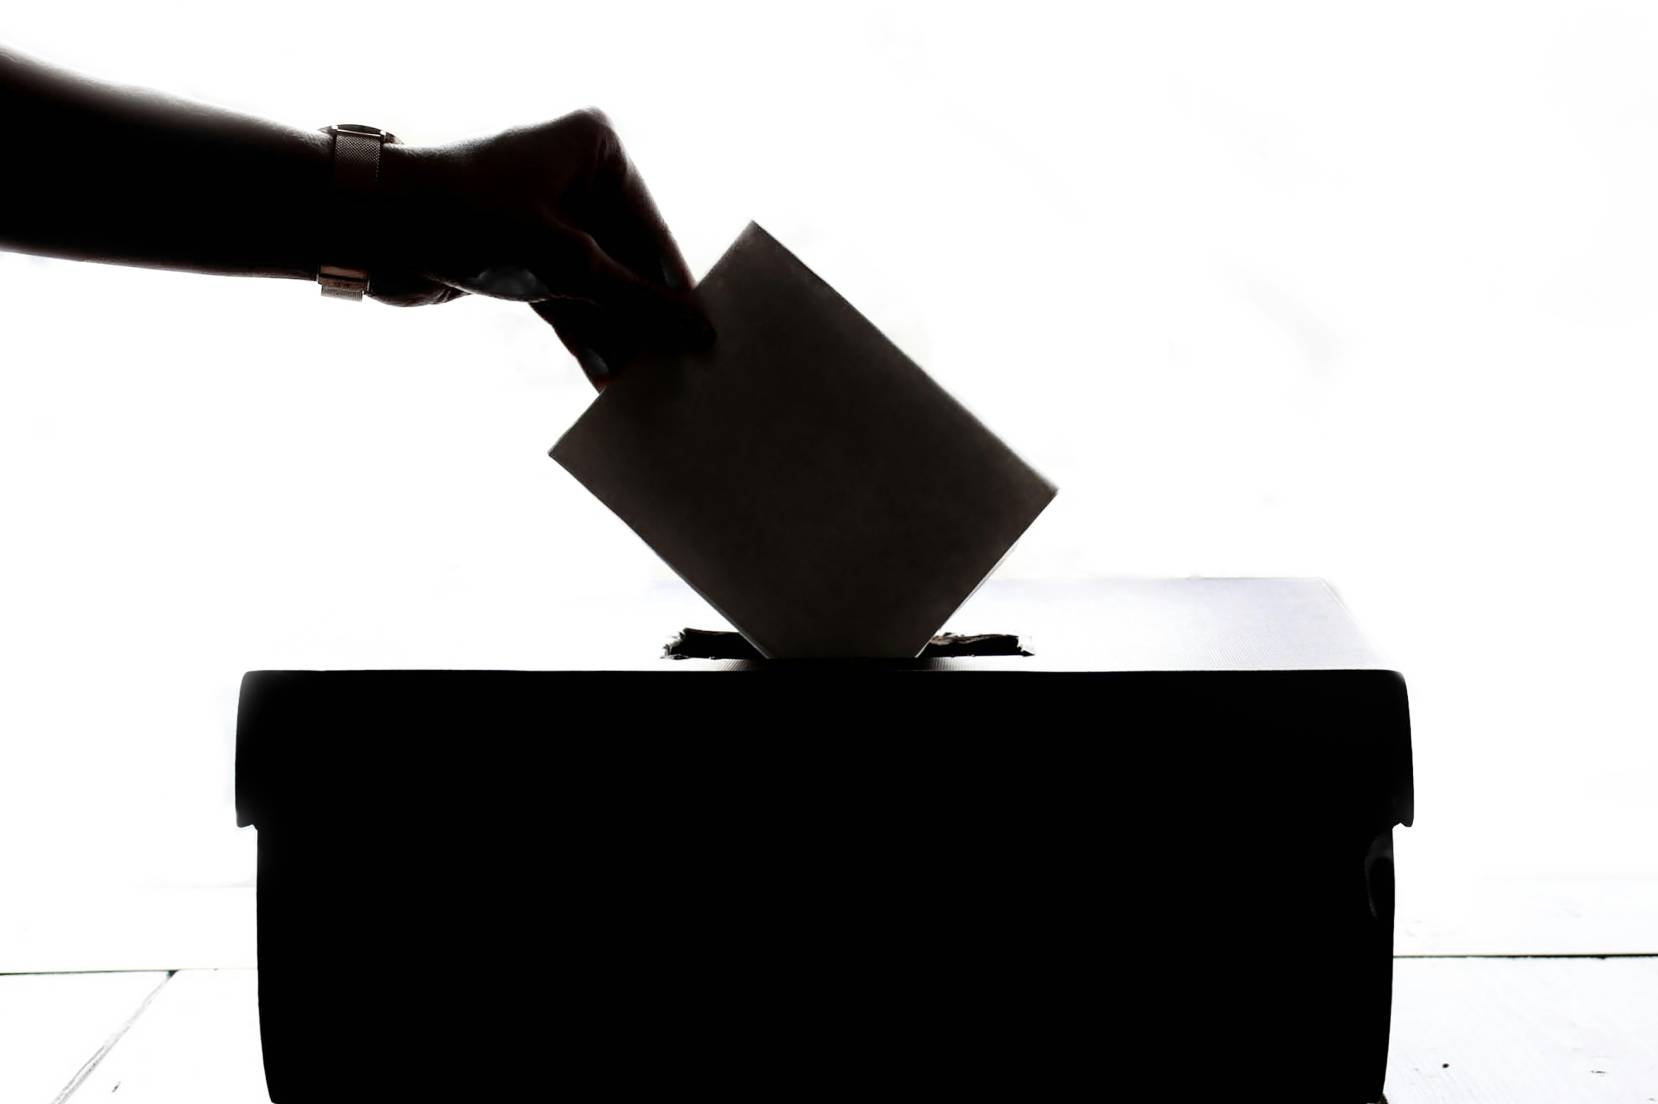 una persona inserisce una scheda elettorale nell'urna